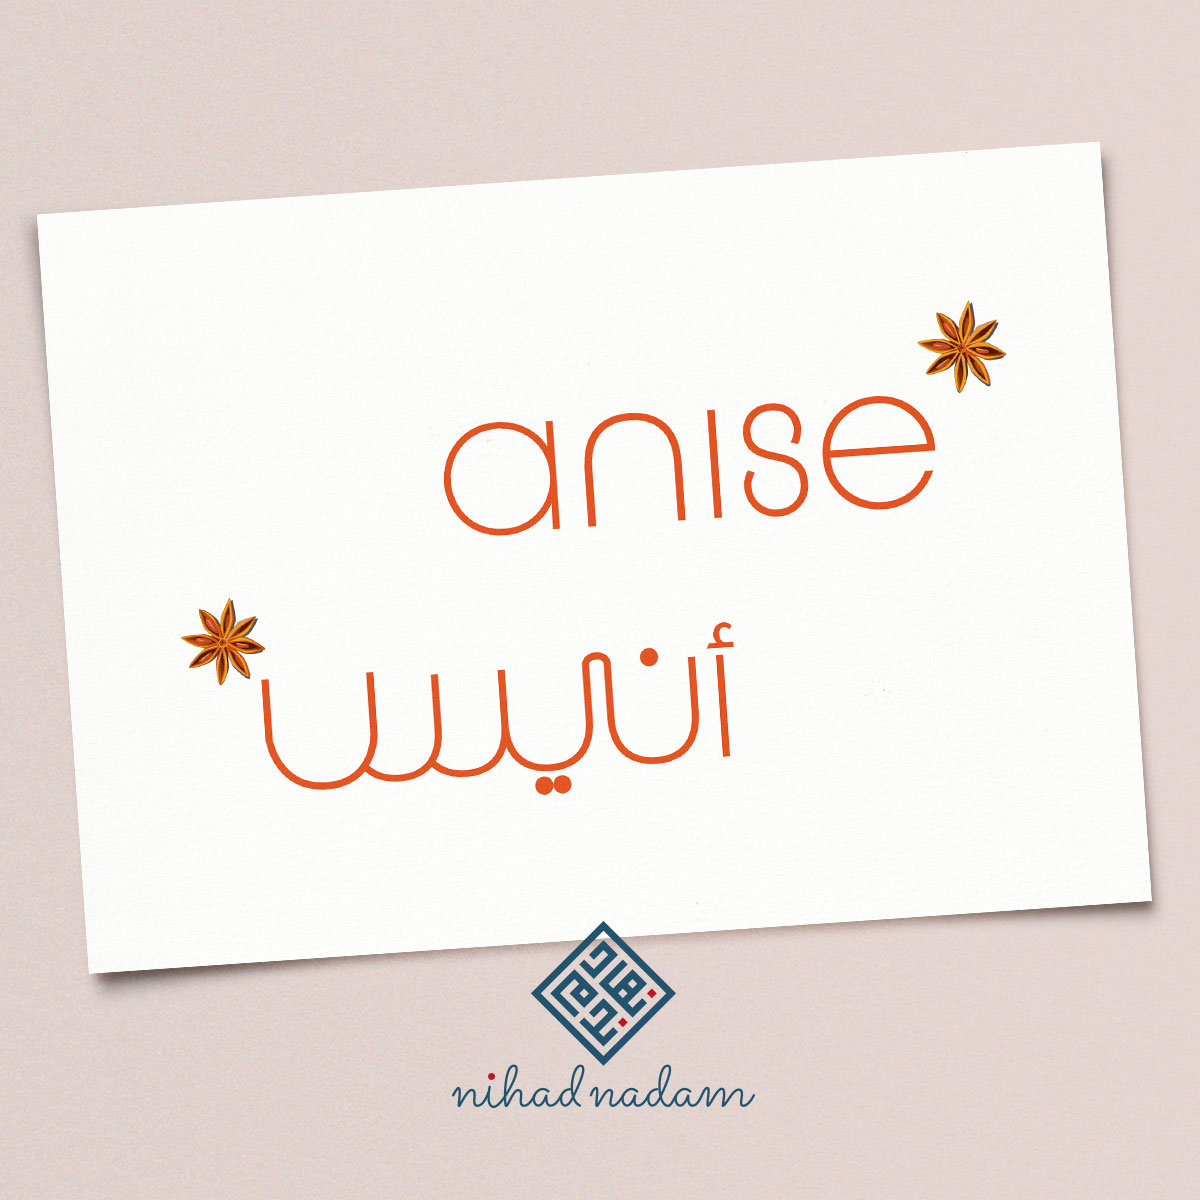 Anise English to Arabic Logo Design